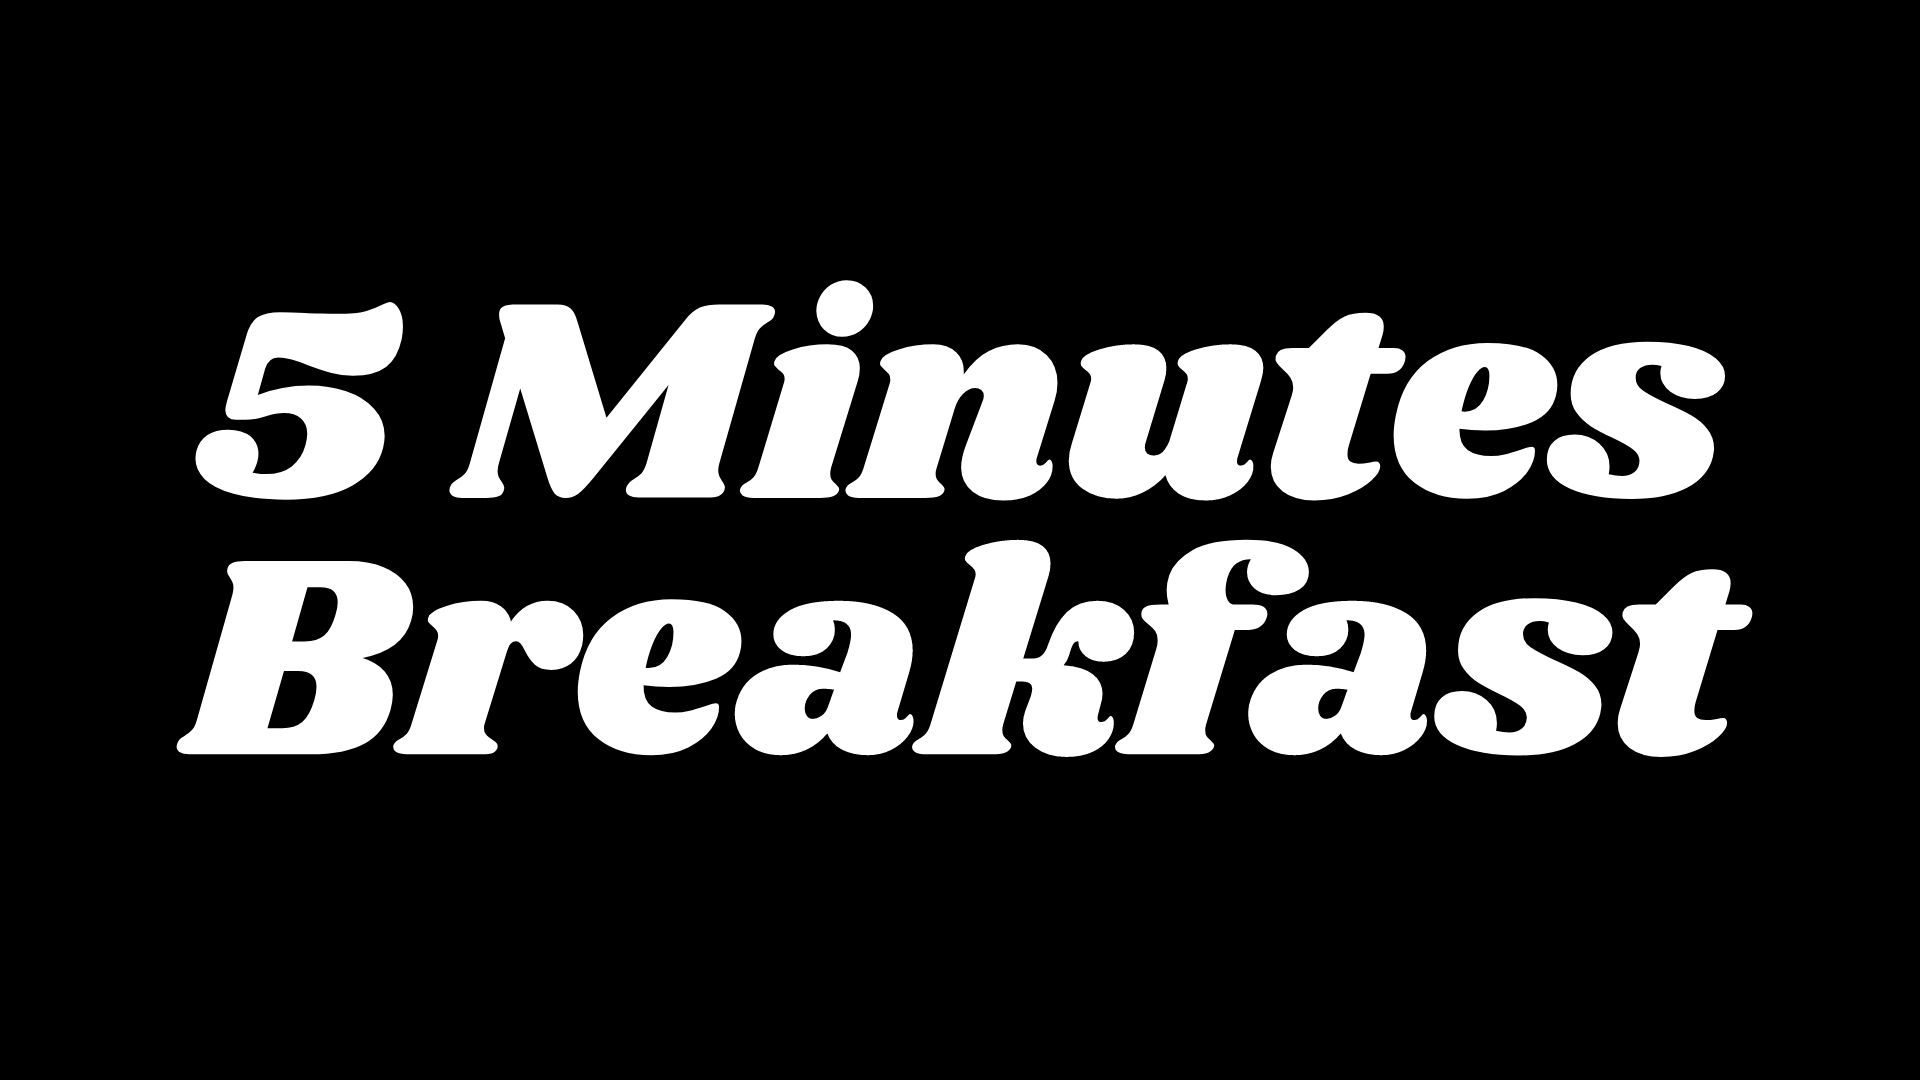 5-Minutes-Breakfast-Recipes-For-Indian-Diet-min-3-min